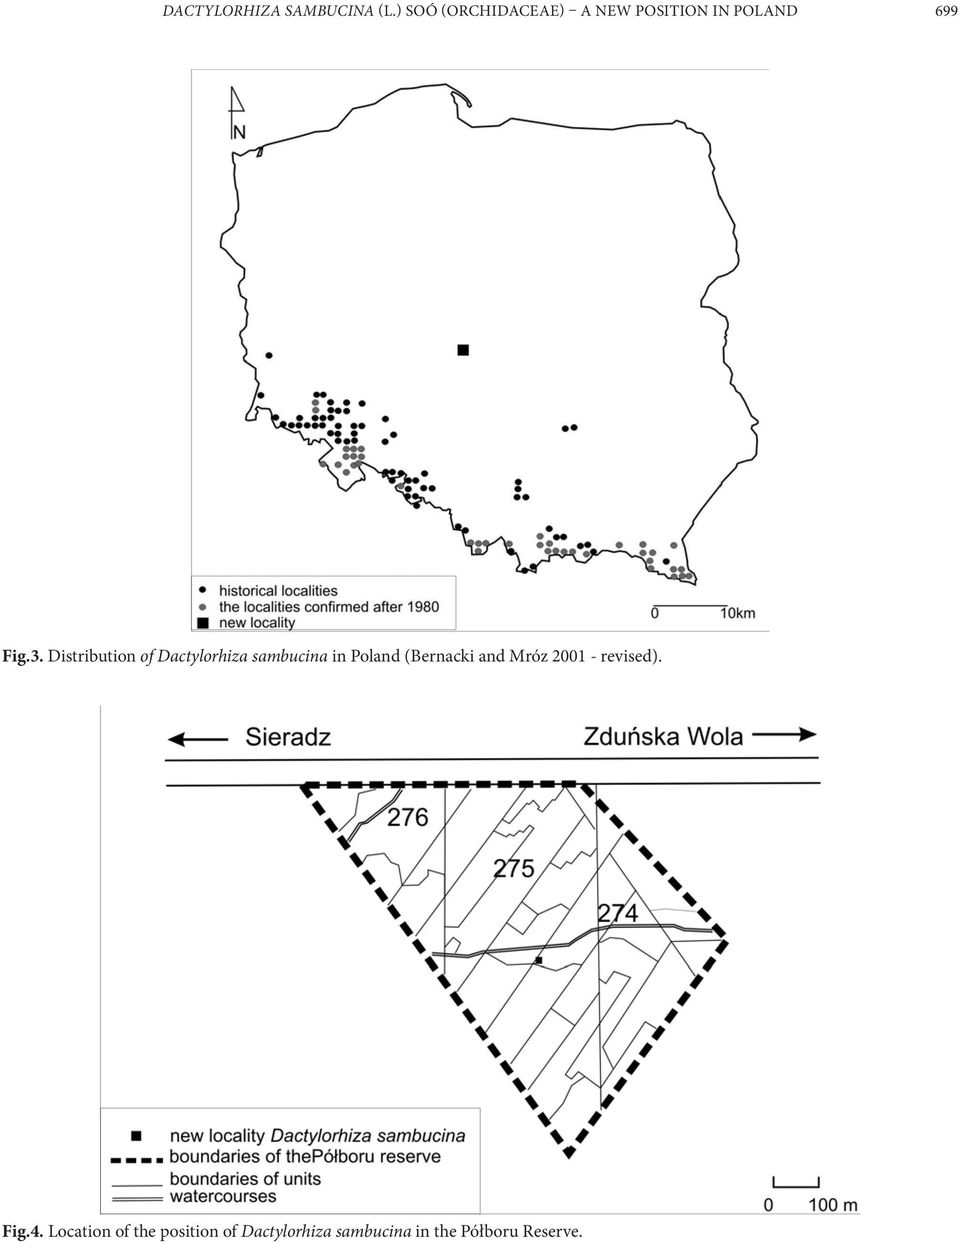 Distribution of Dactylorhiza sambucina in Poland (Bernacki